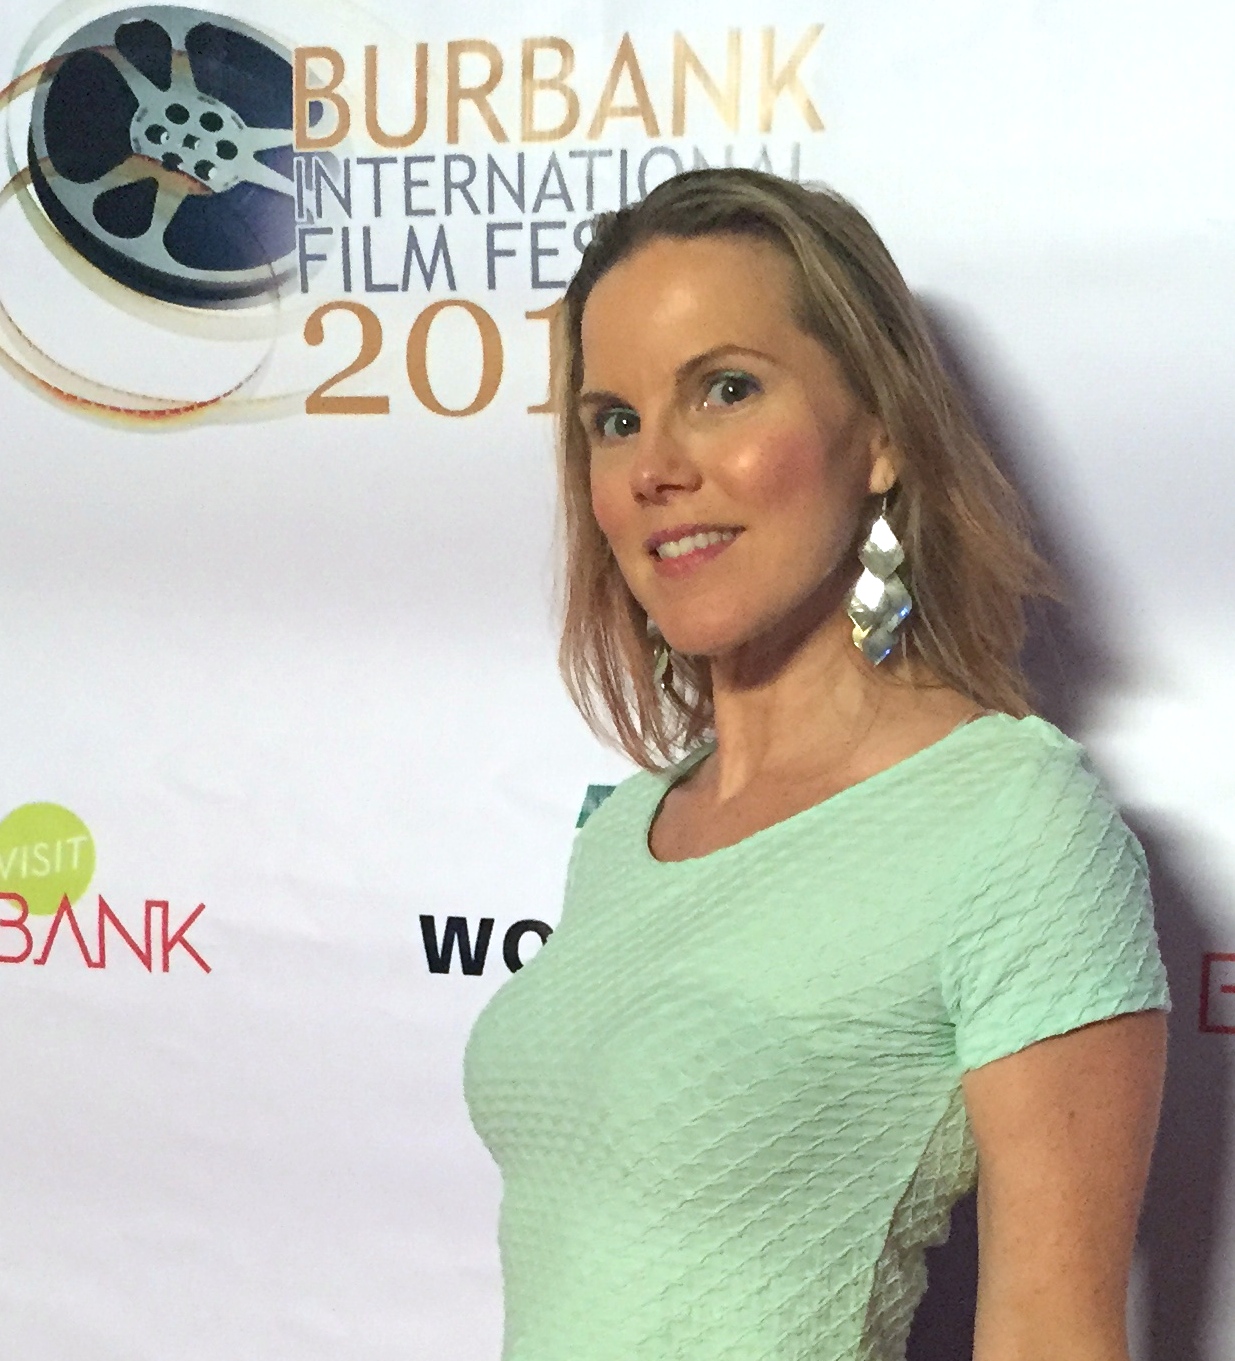 Joy Mahaffey Burbank International Film Festival 2015 Nominated for Best Woman Filmmaker and Actress